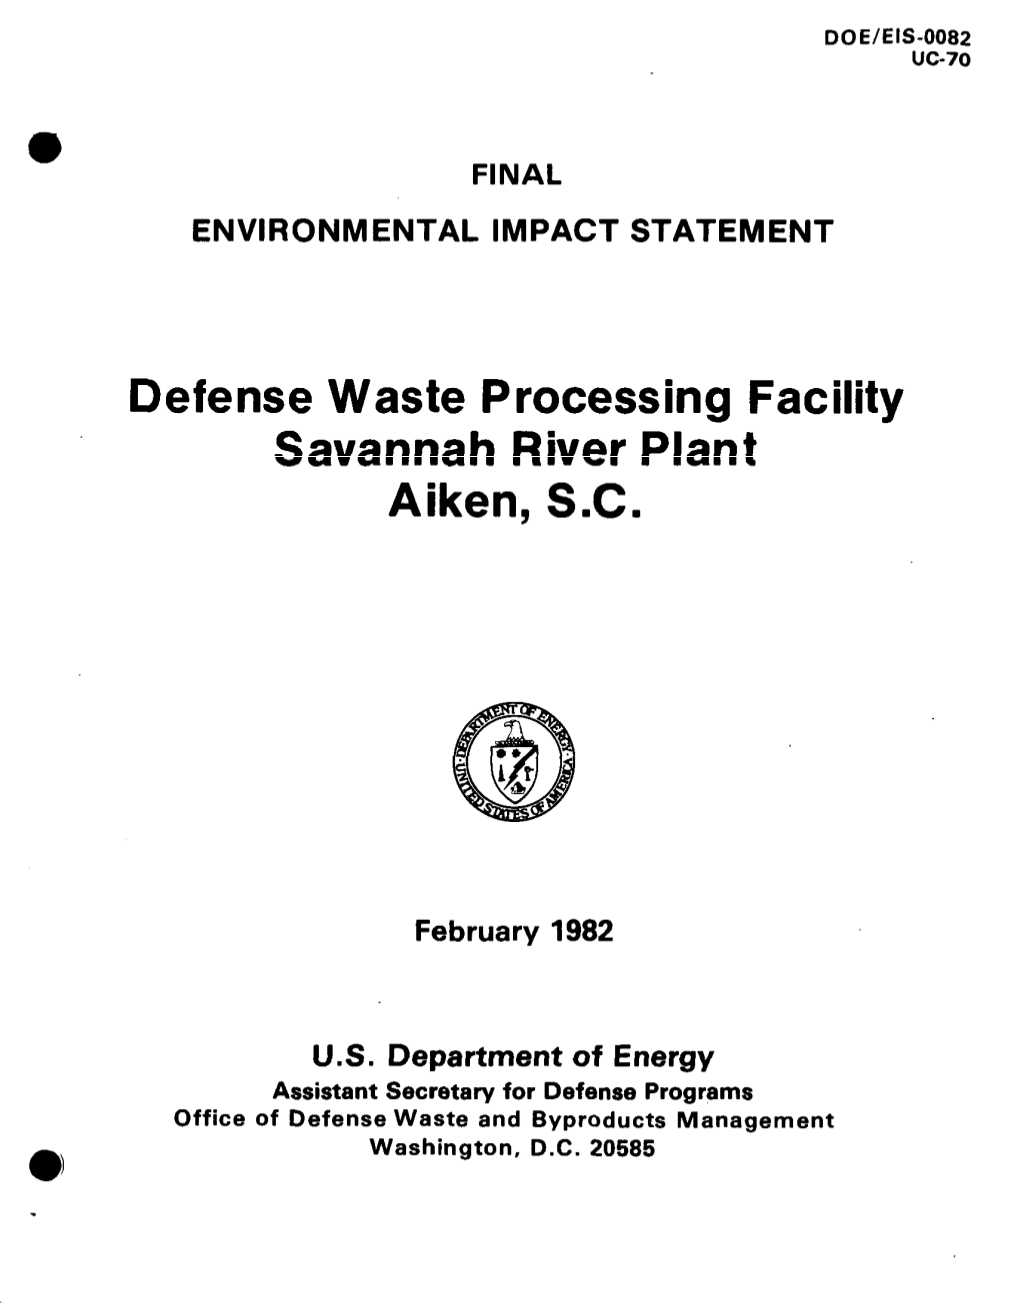 Defense Waste Processing Facility Savannah River Plant Aiken, S.C